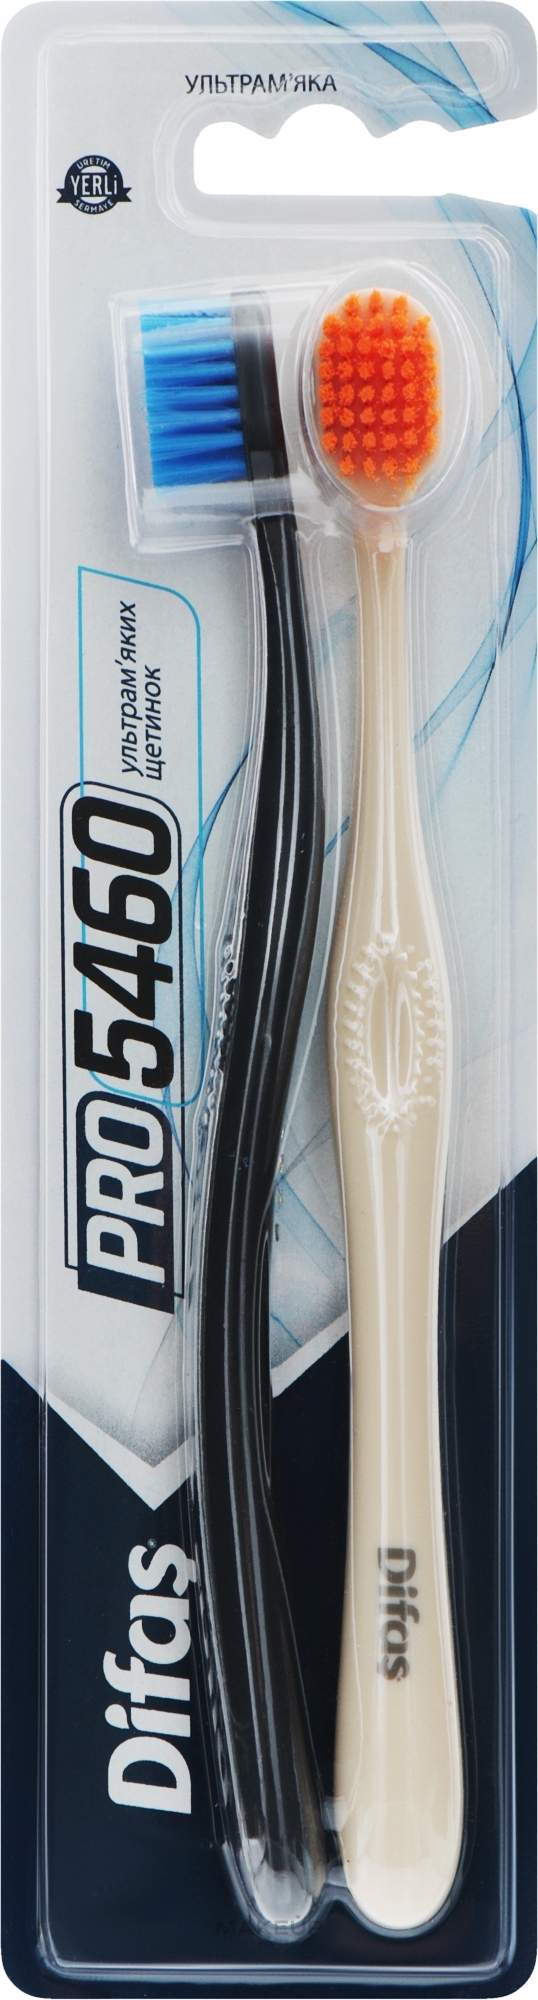 Набор зубных щеток "Ultra Soft", черная + бежевая - Difas PRO 5460 — фото 2шт